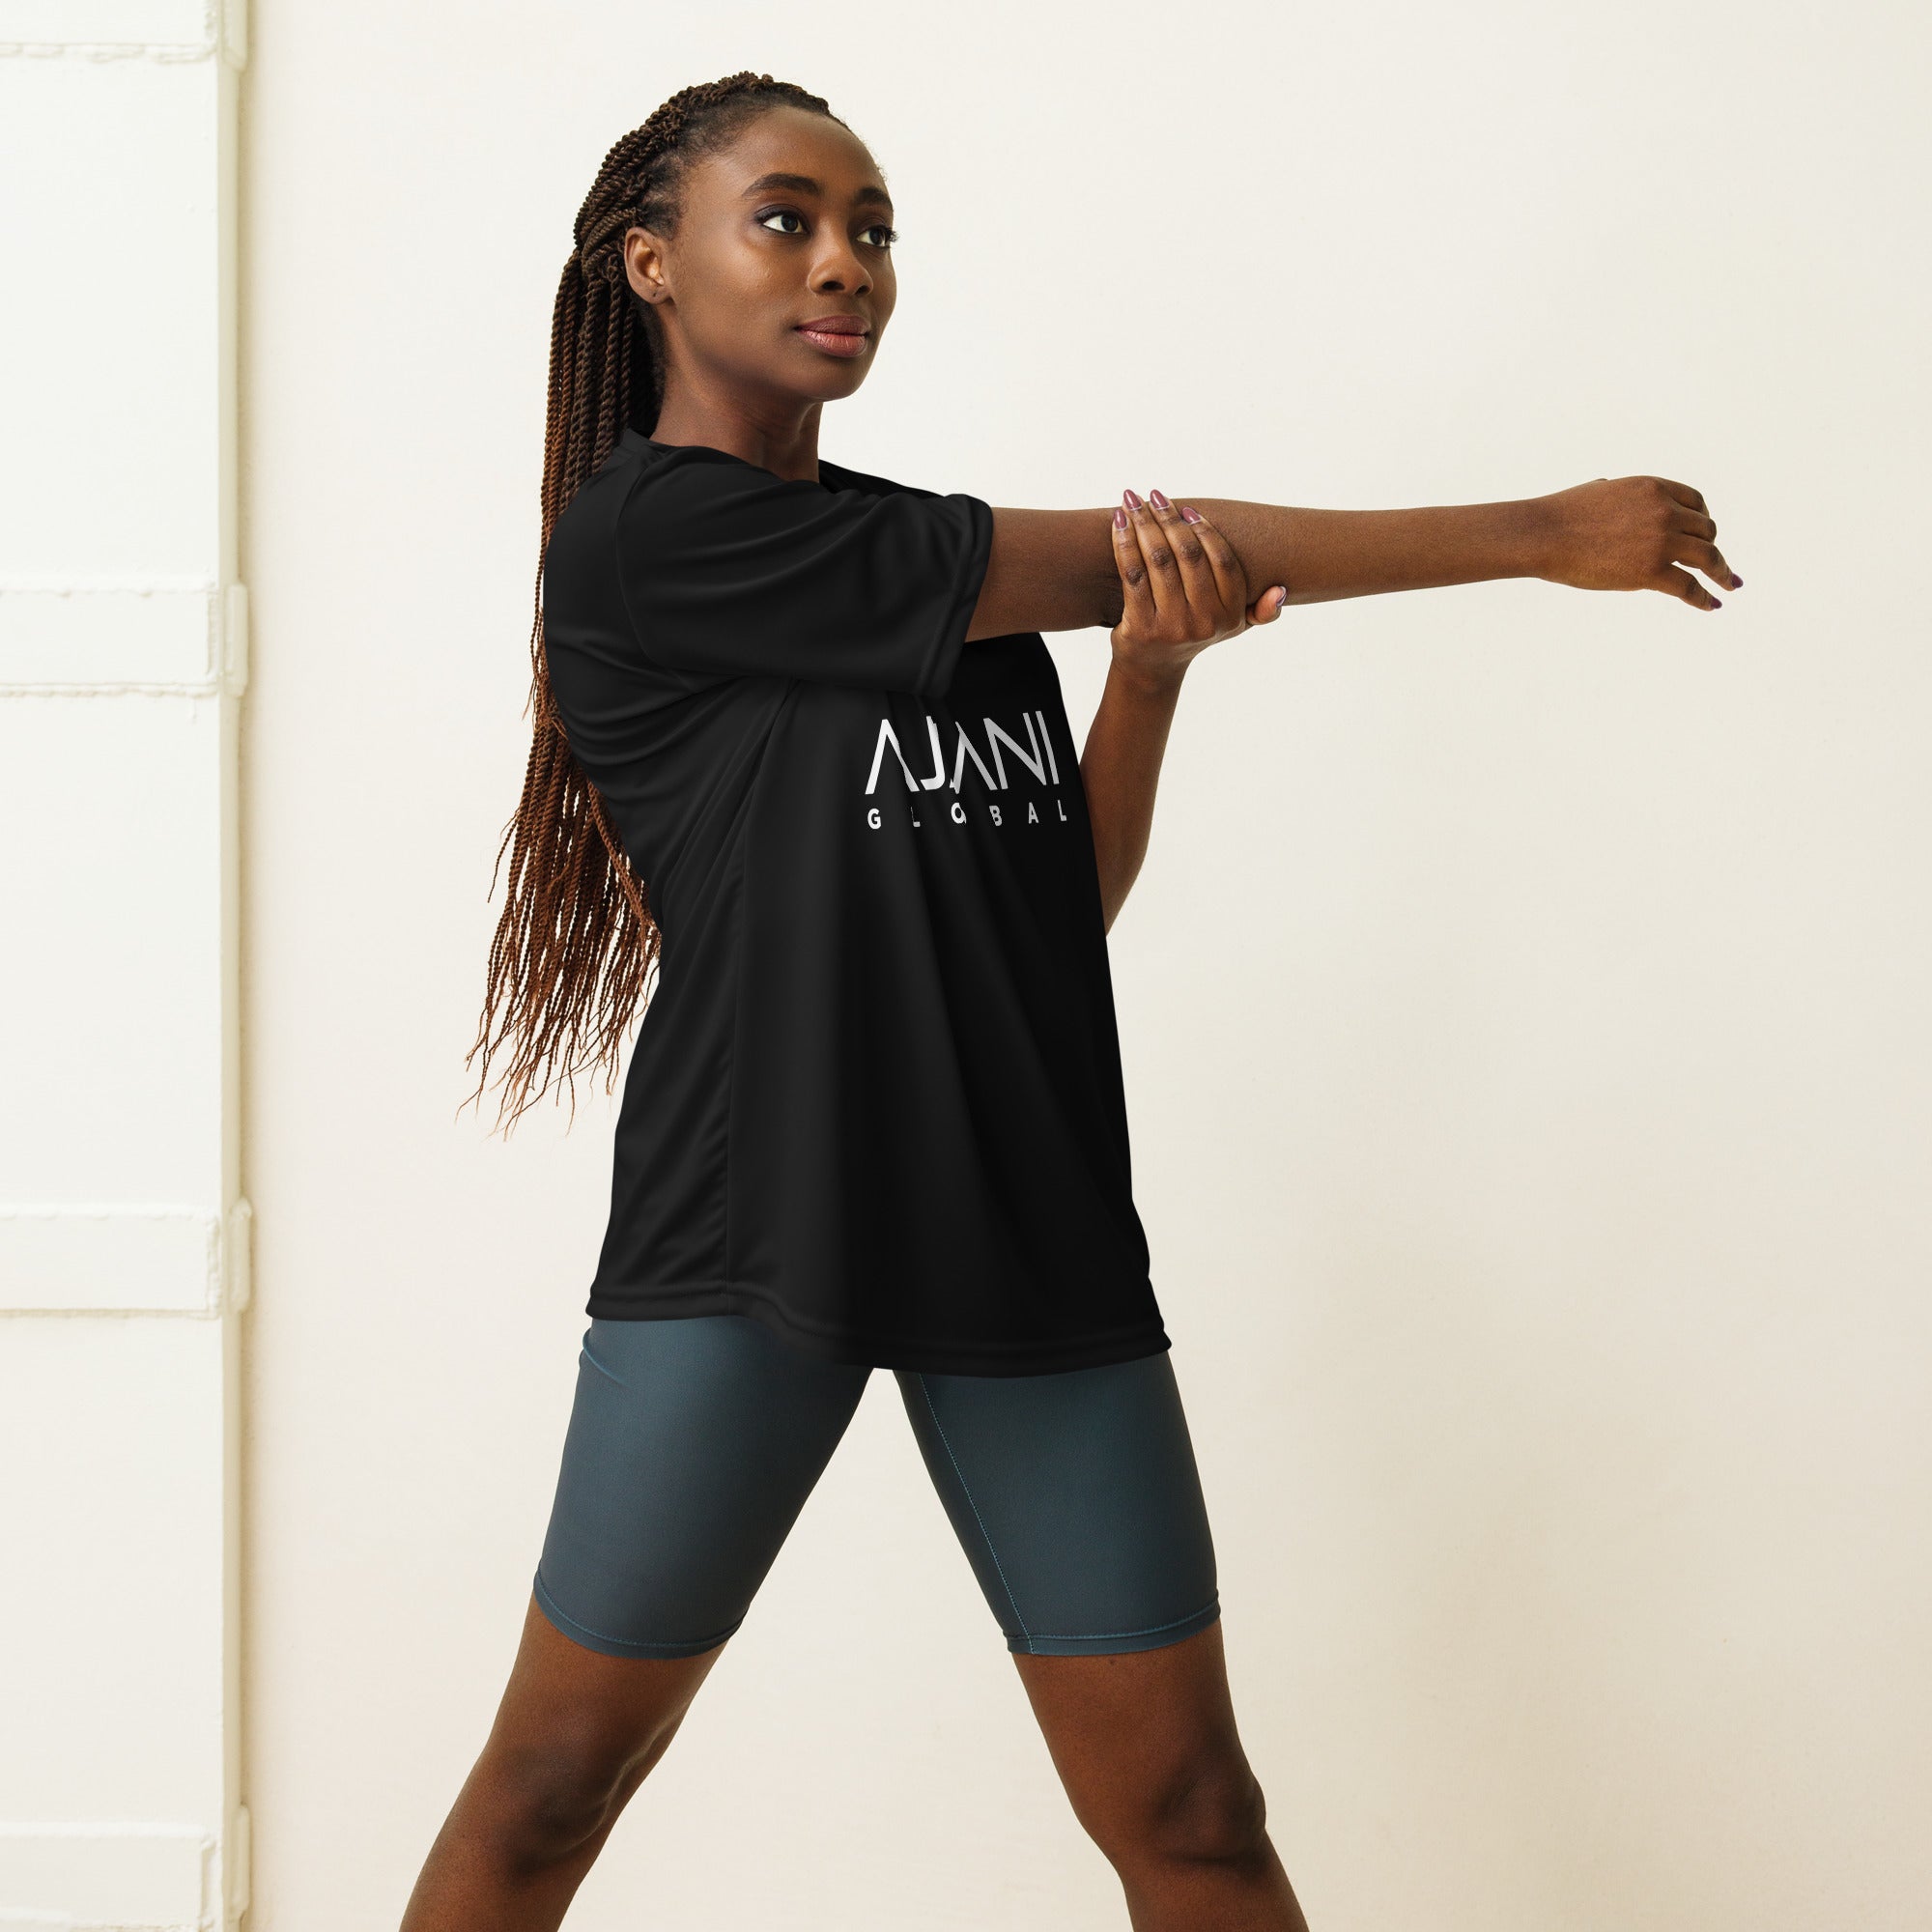 Ajani performance crew neck t-shirt